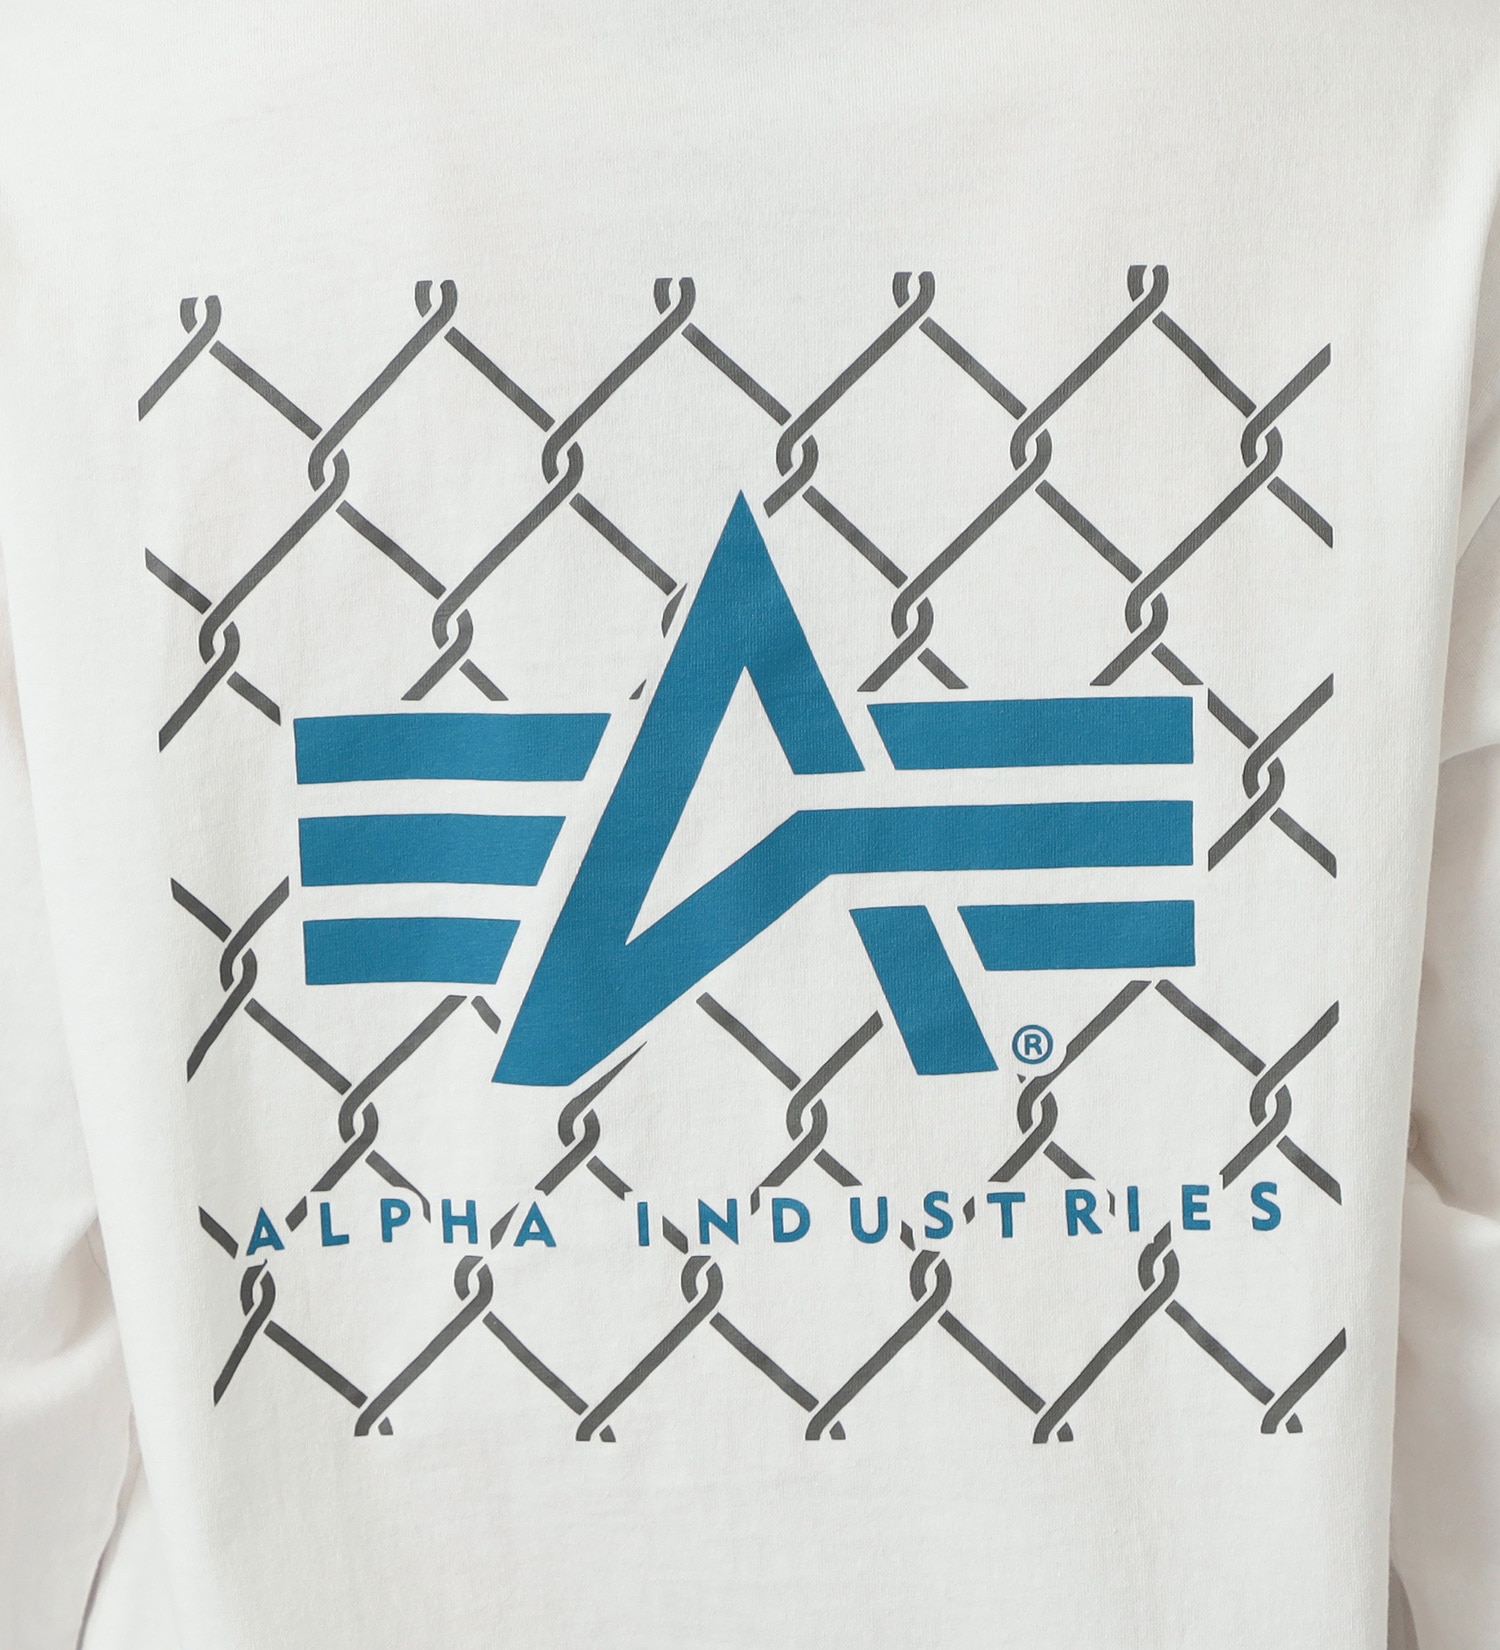 ALPHA(アルファ)の【GW SALE】バックプリントボックスロゴ 長袖Tシャツ(WIRE)|トップス/Tシャツ/カットソー/メンズ|ホワイト